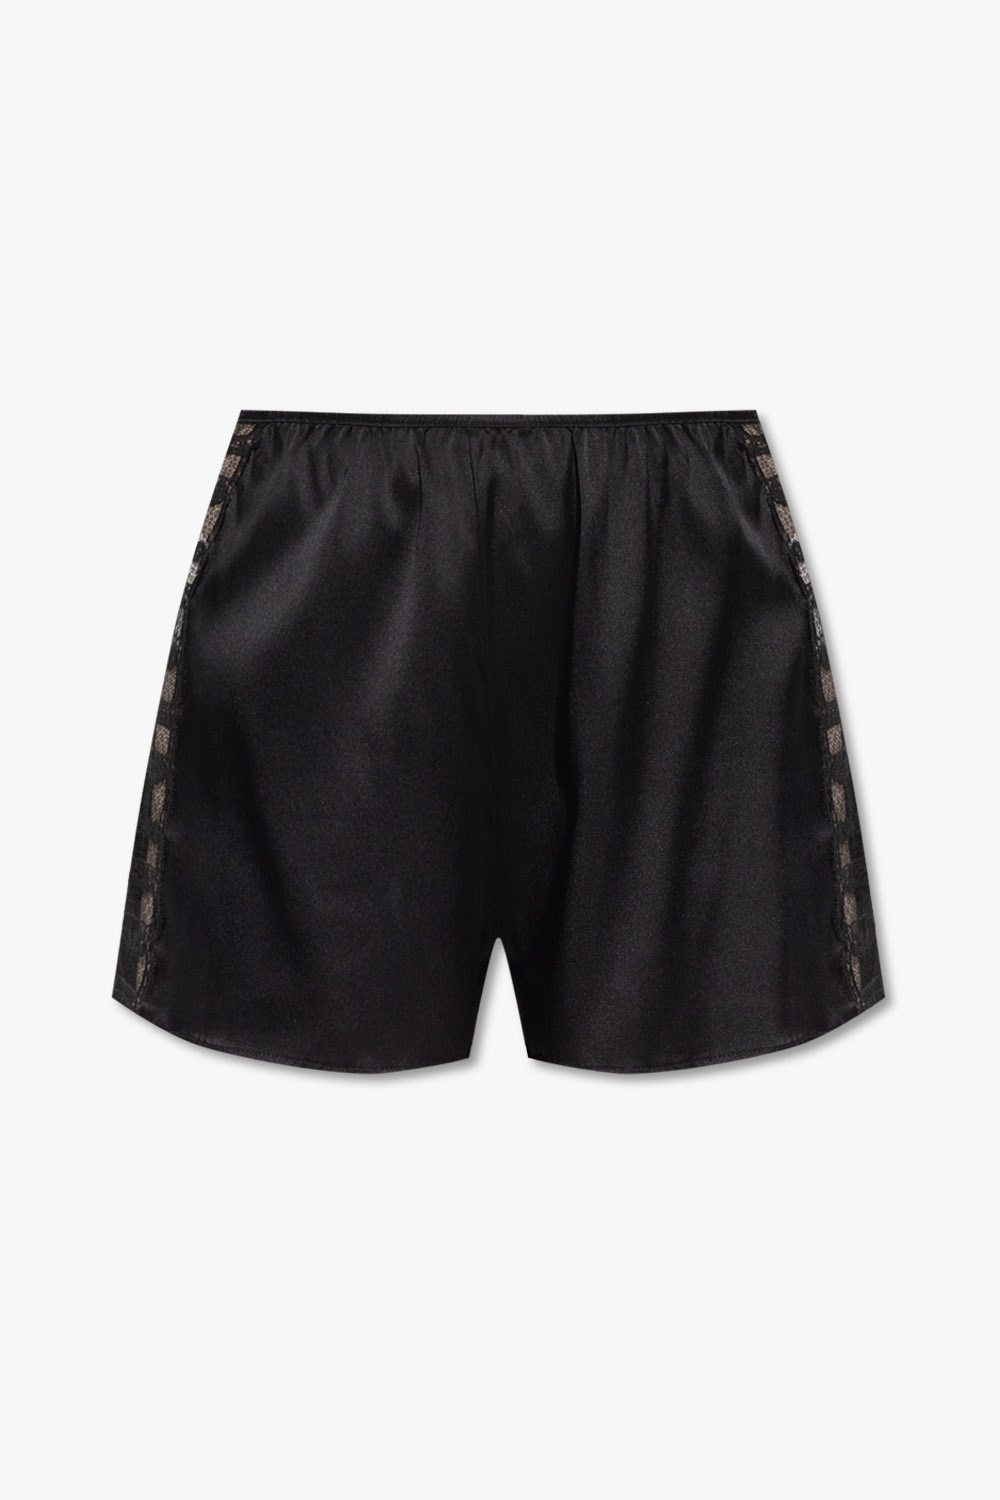 ‘Murmure’ underwear shorts LIVY - Vitkac GB